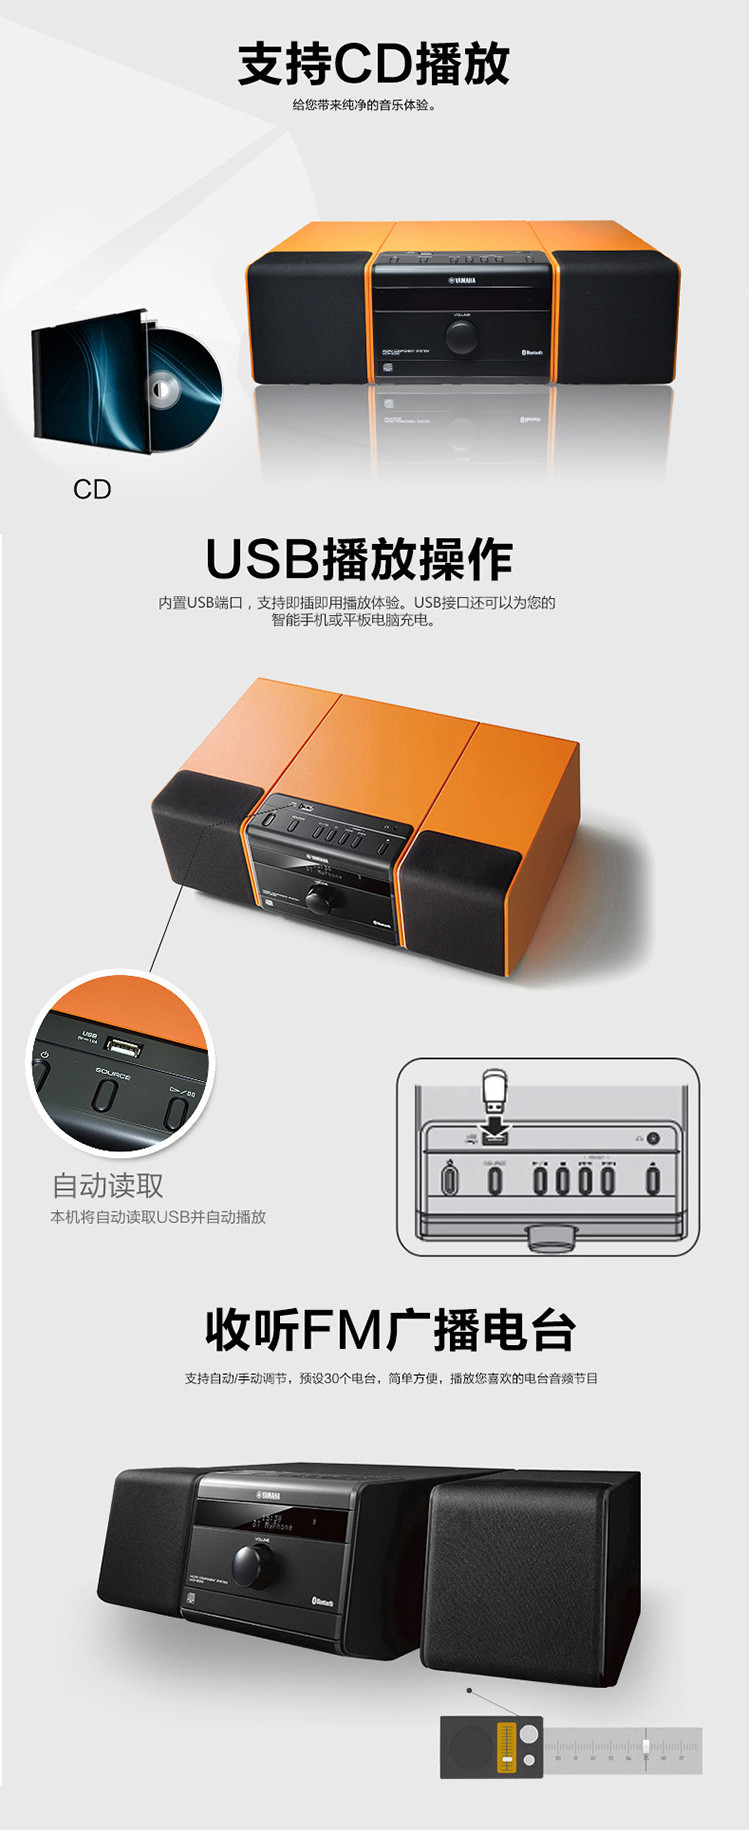 Yamaha/雅马哈MCR-B020 迷你/组合音响 2.0声道CD播放机 家用音响设备 功放与碟机一体式 黑色